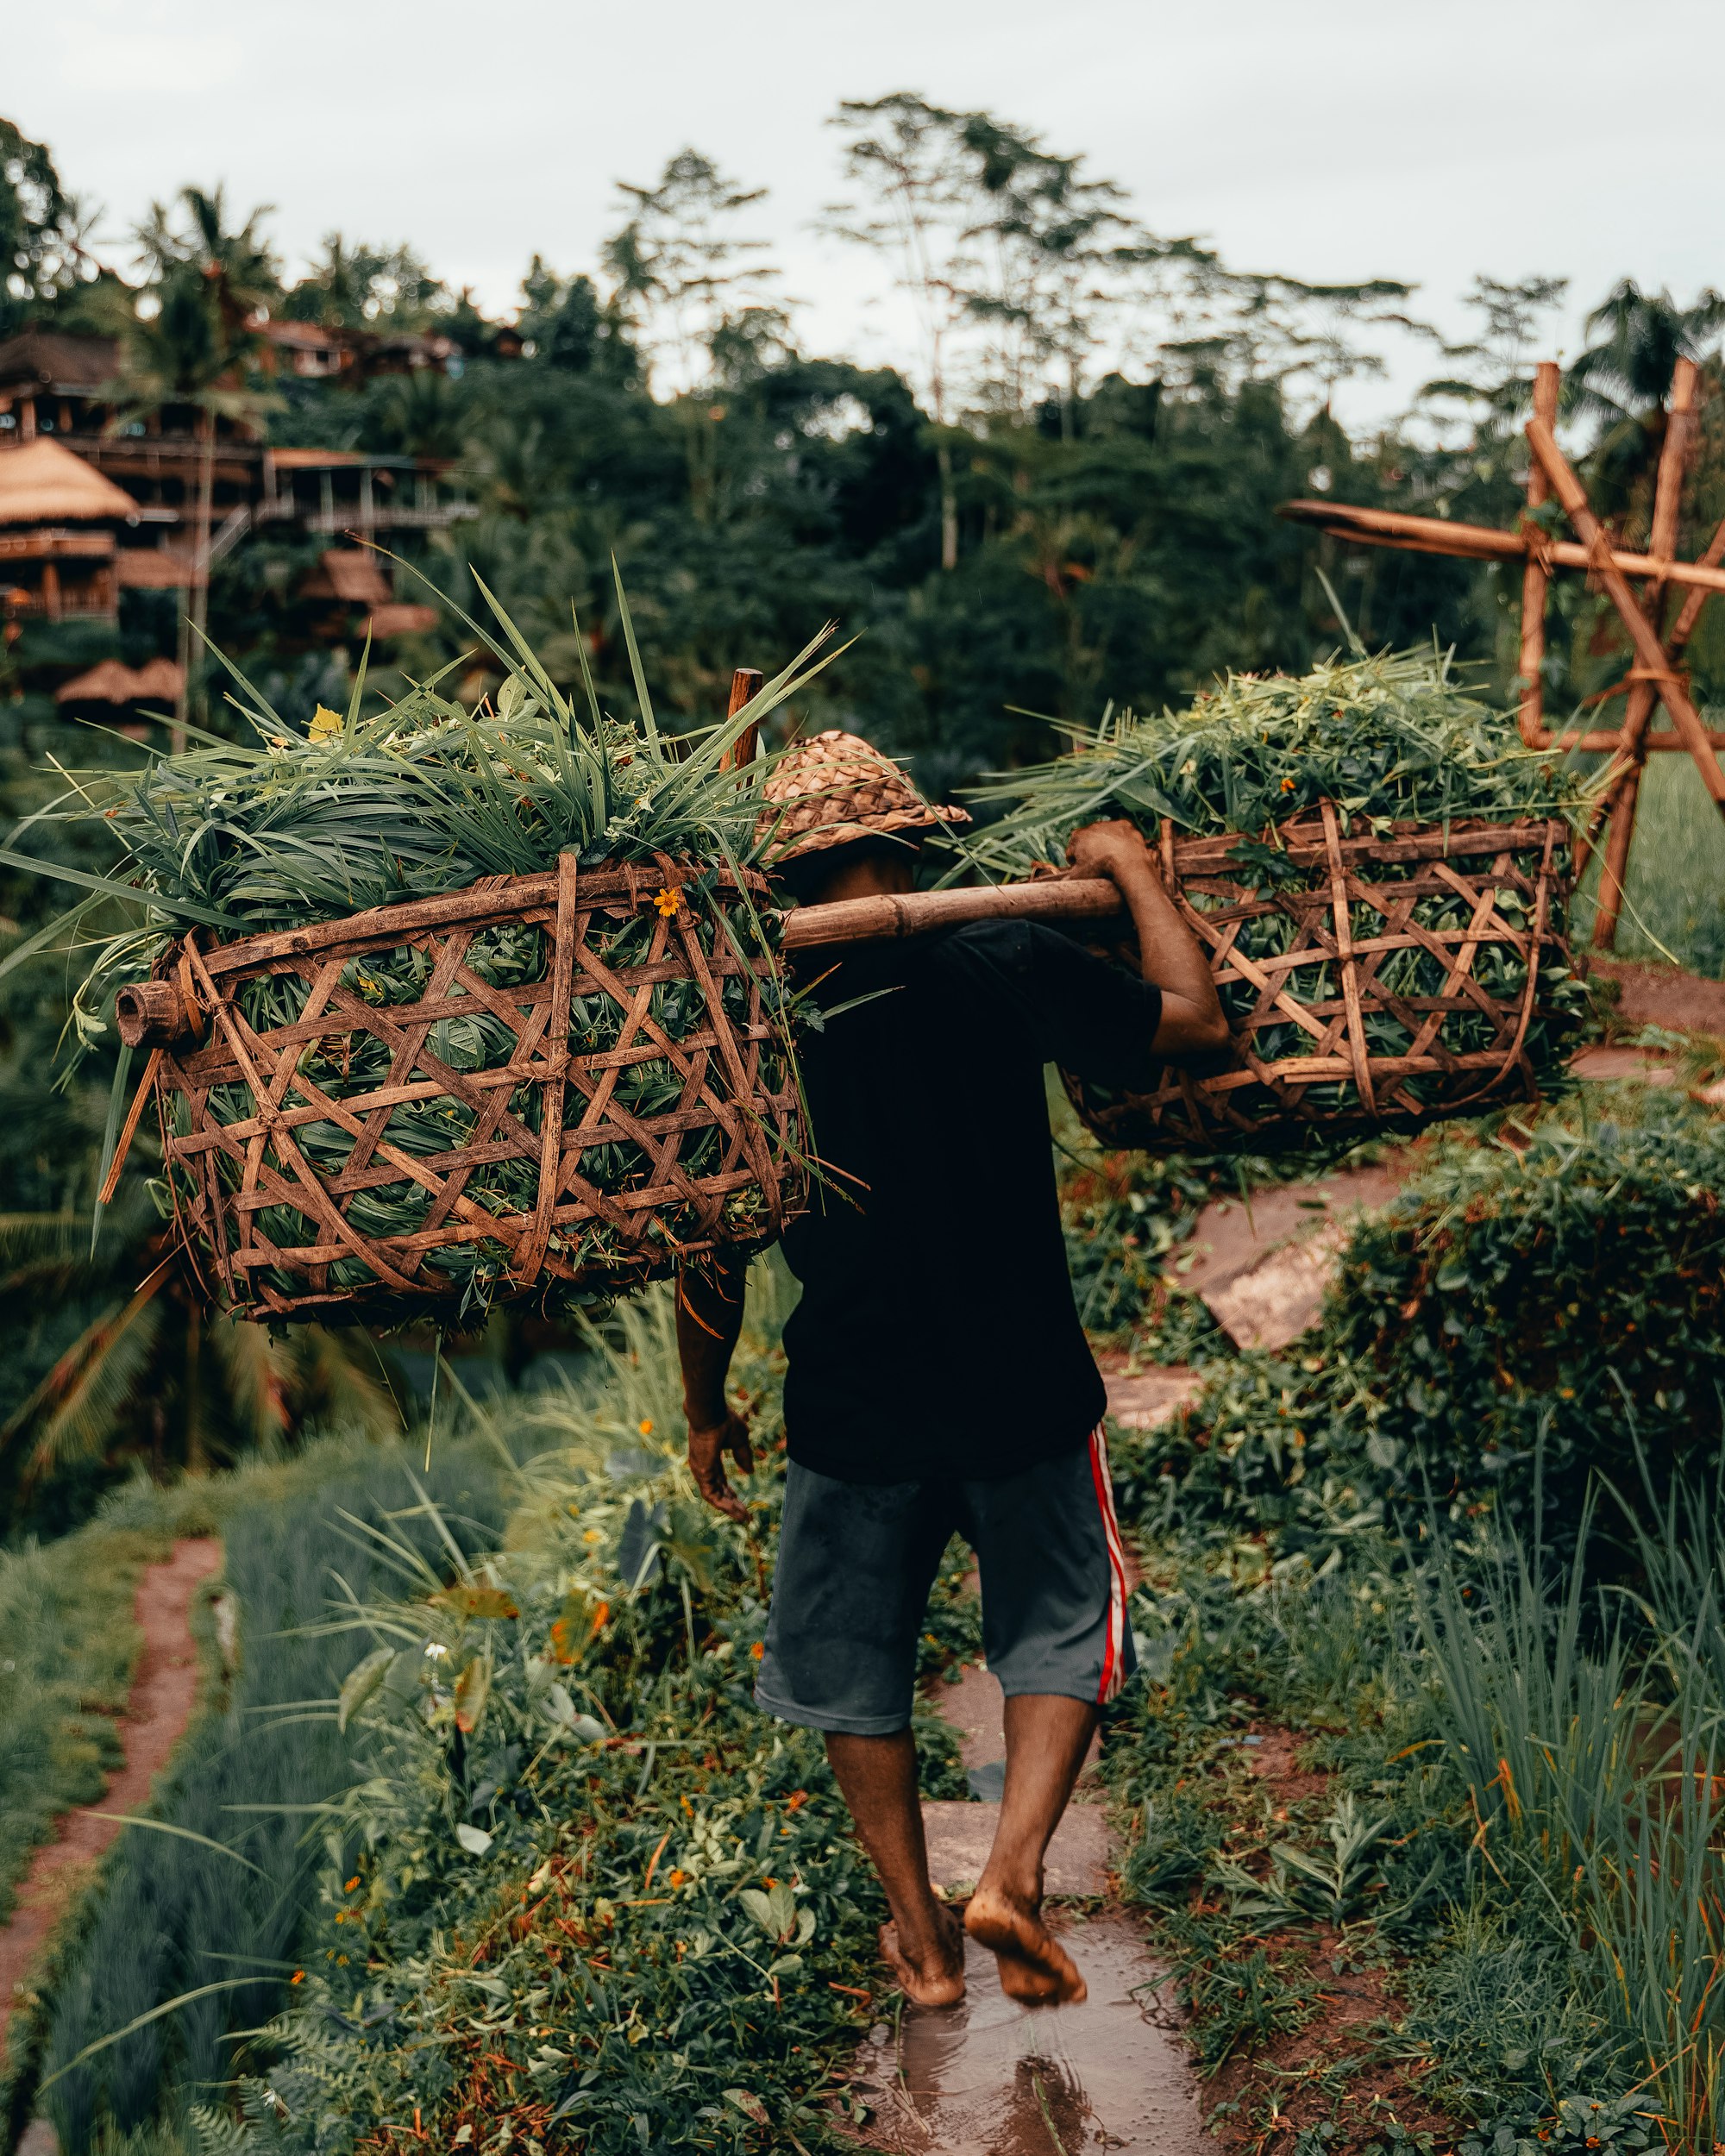 Man carrying rice in Bali, Indonesia